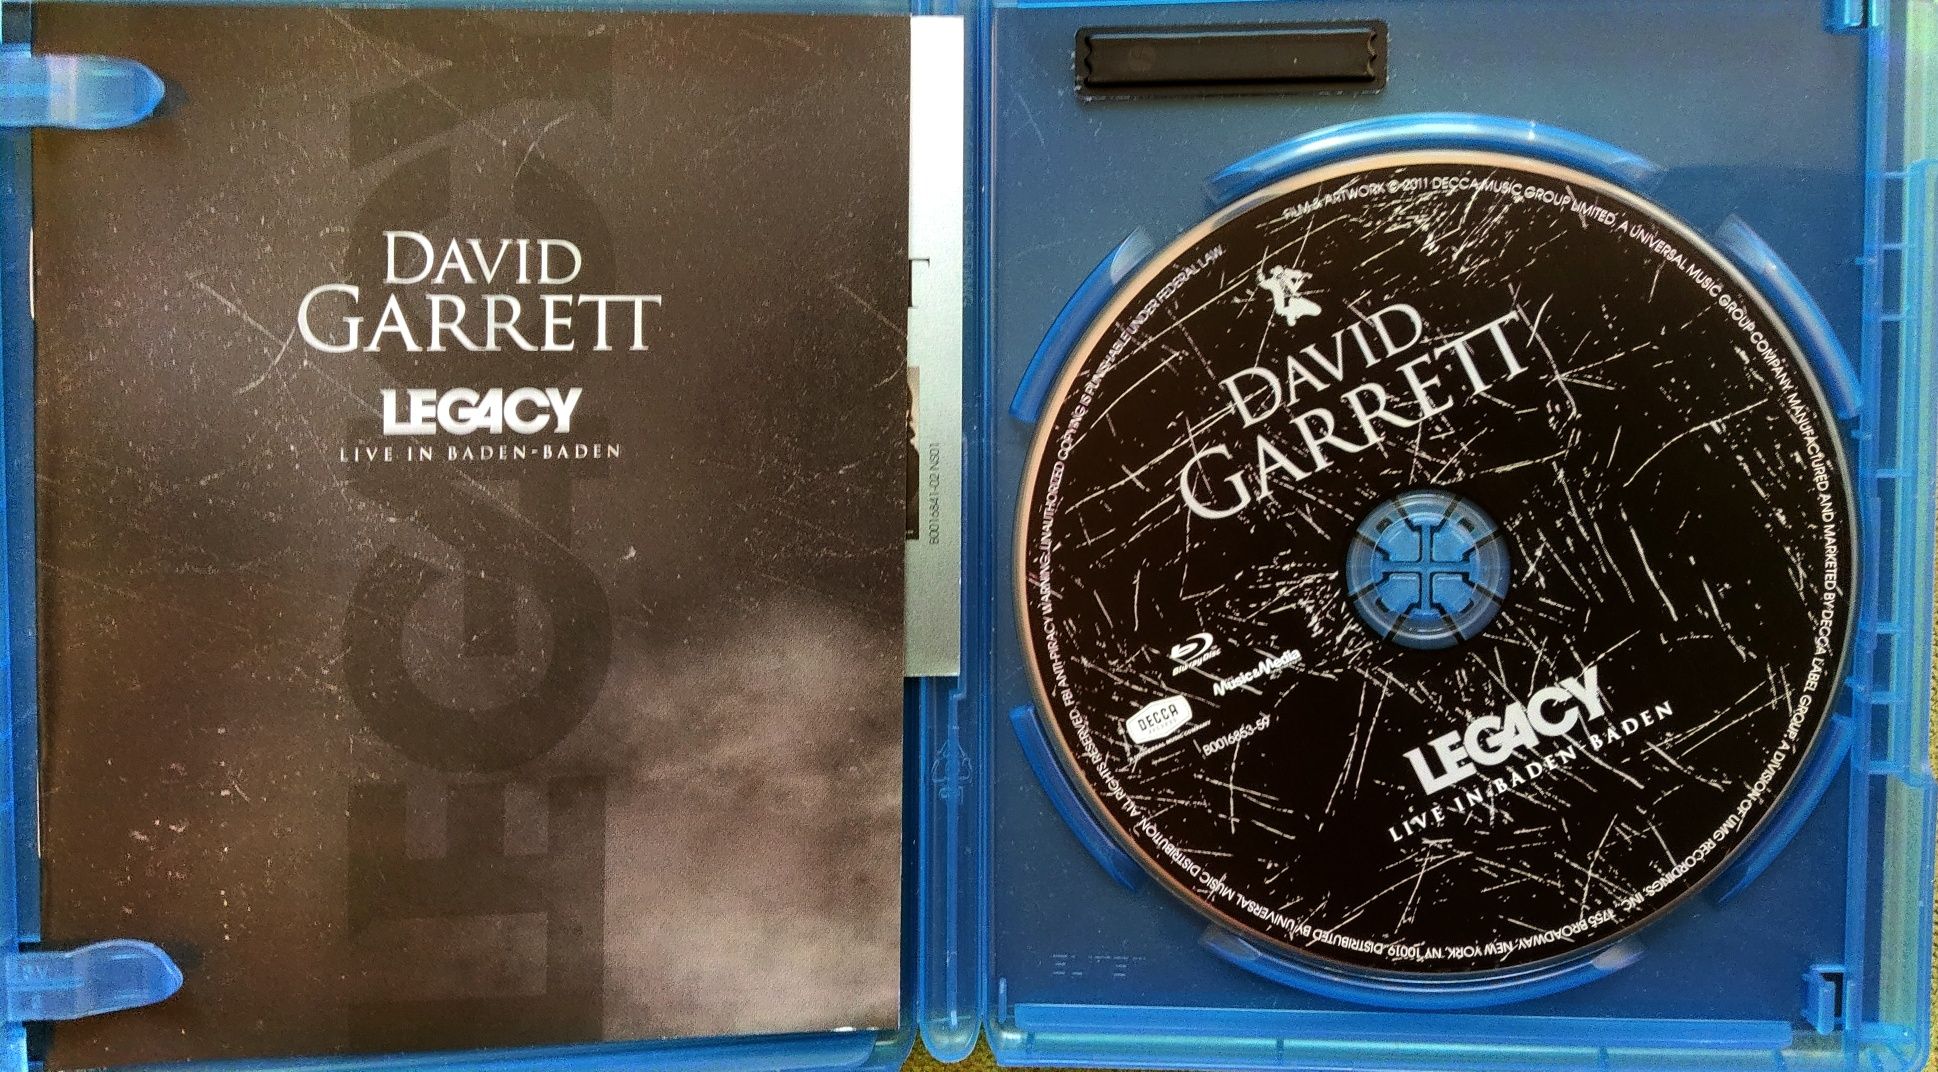 David Garret "Legacy" Live in Baden- Baden  Blu ray